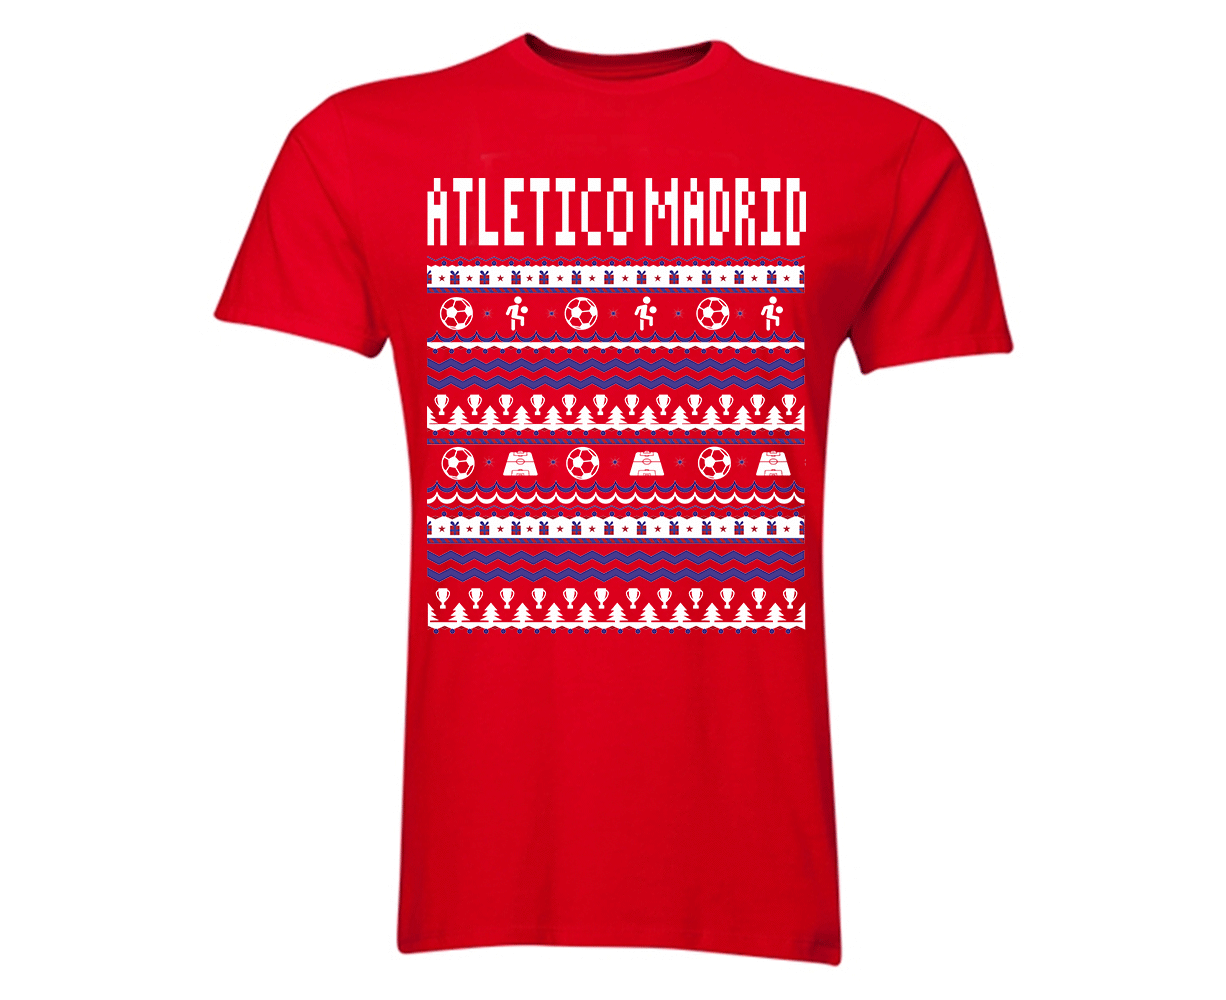 Atletico Madrid Christmas T-Shirt (Red)